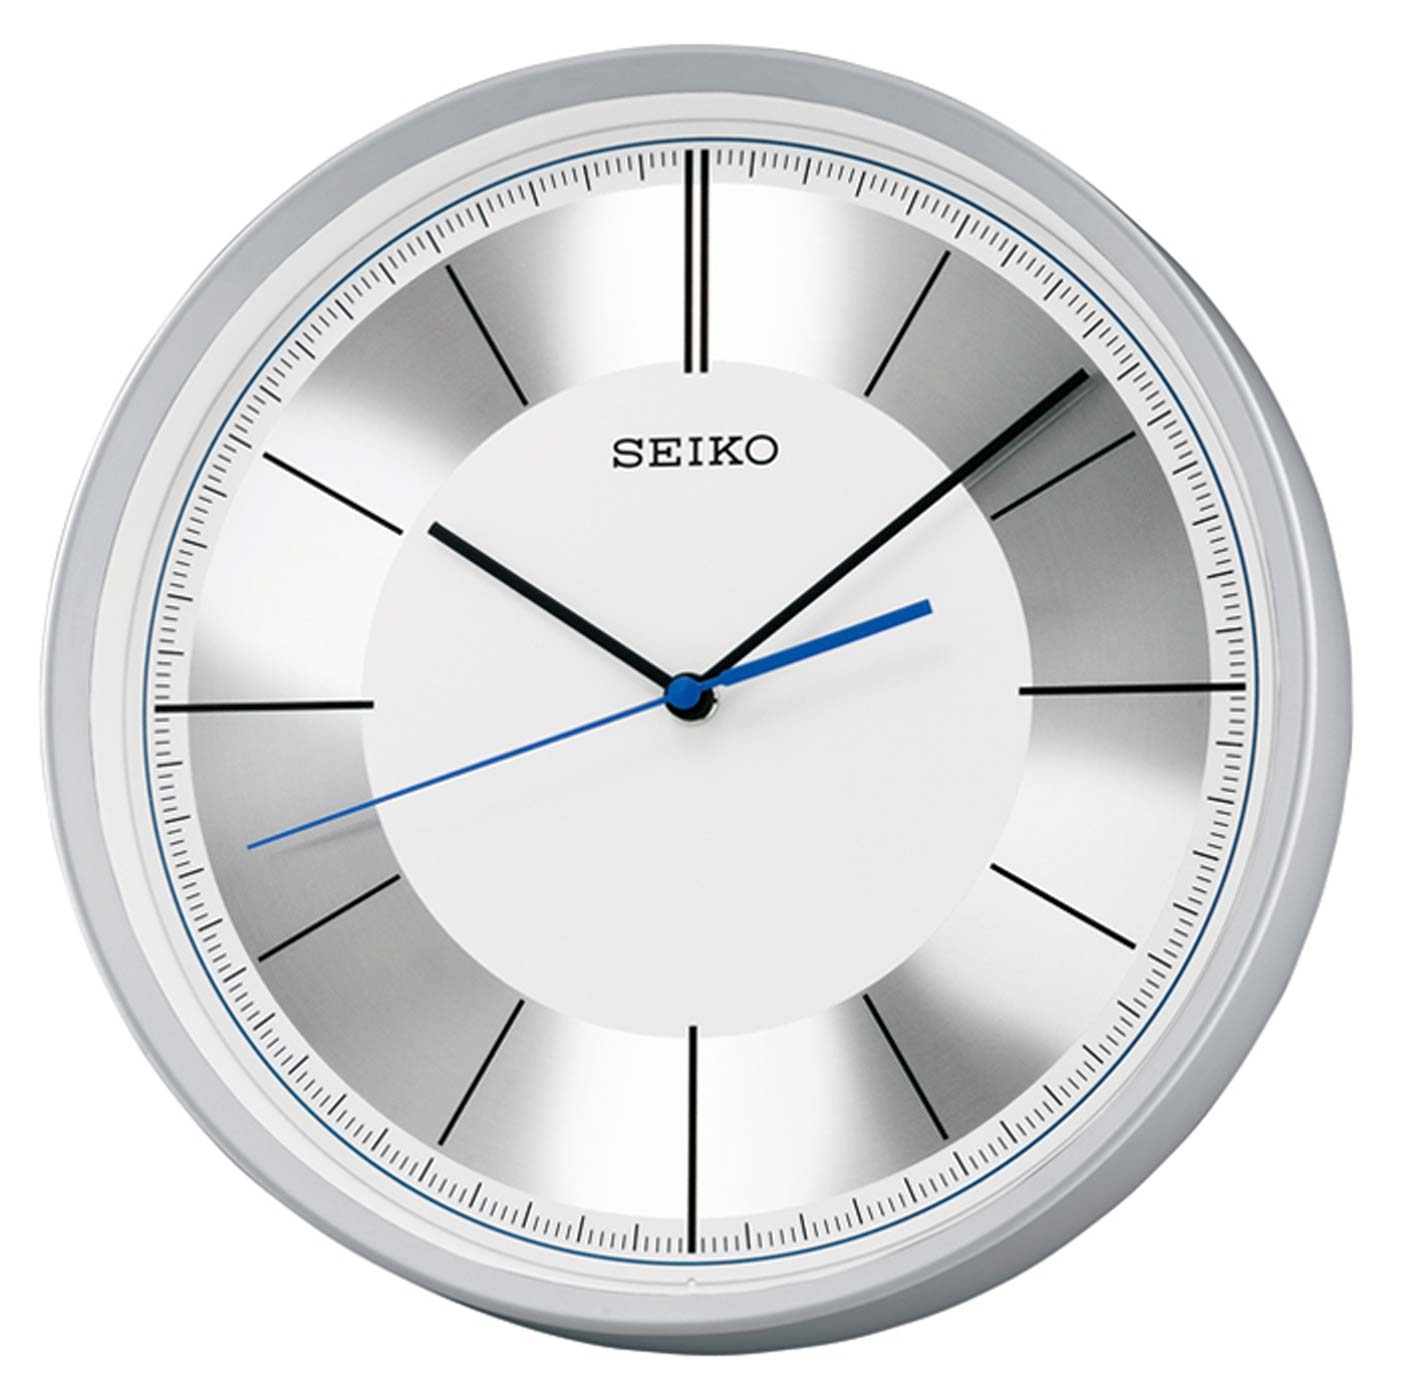 Seiko quartz westminster whittington wall clock